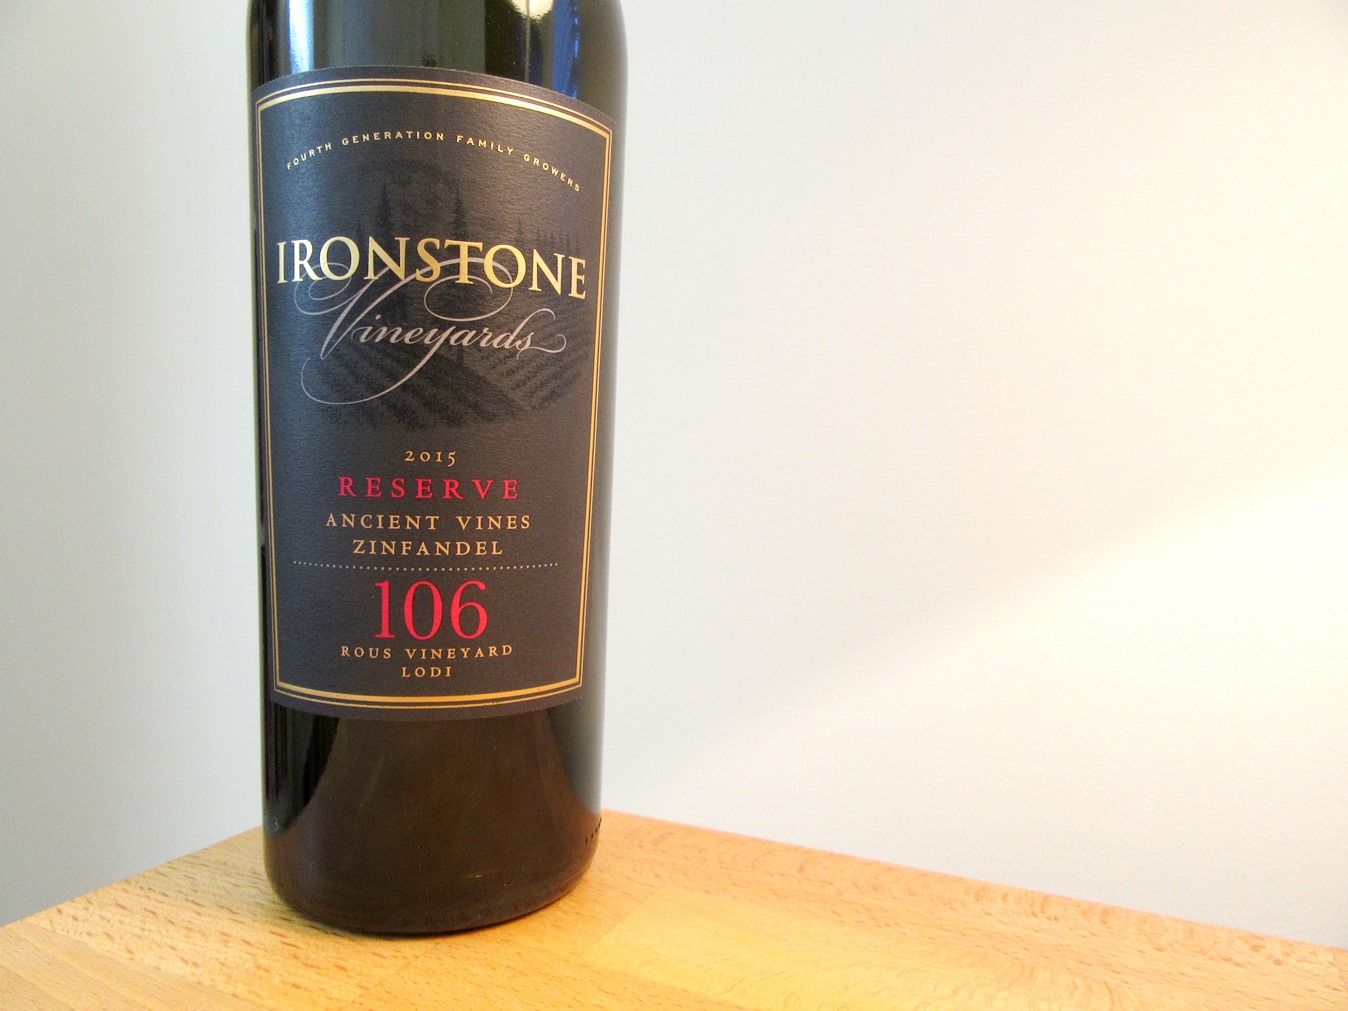 Ironstone Vineyards, Reserve Ancient Vines Zinfandel 2015, Rous Vineyard, Lodi, California, Wine Casual